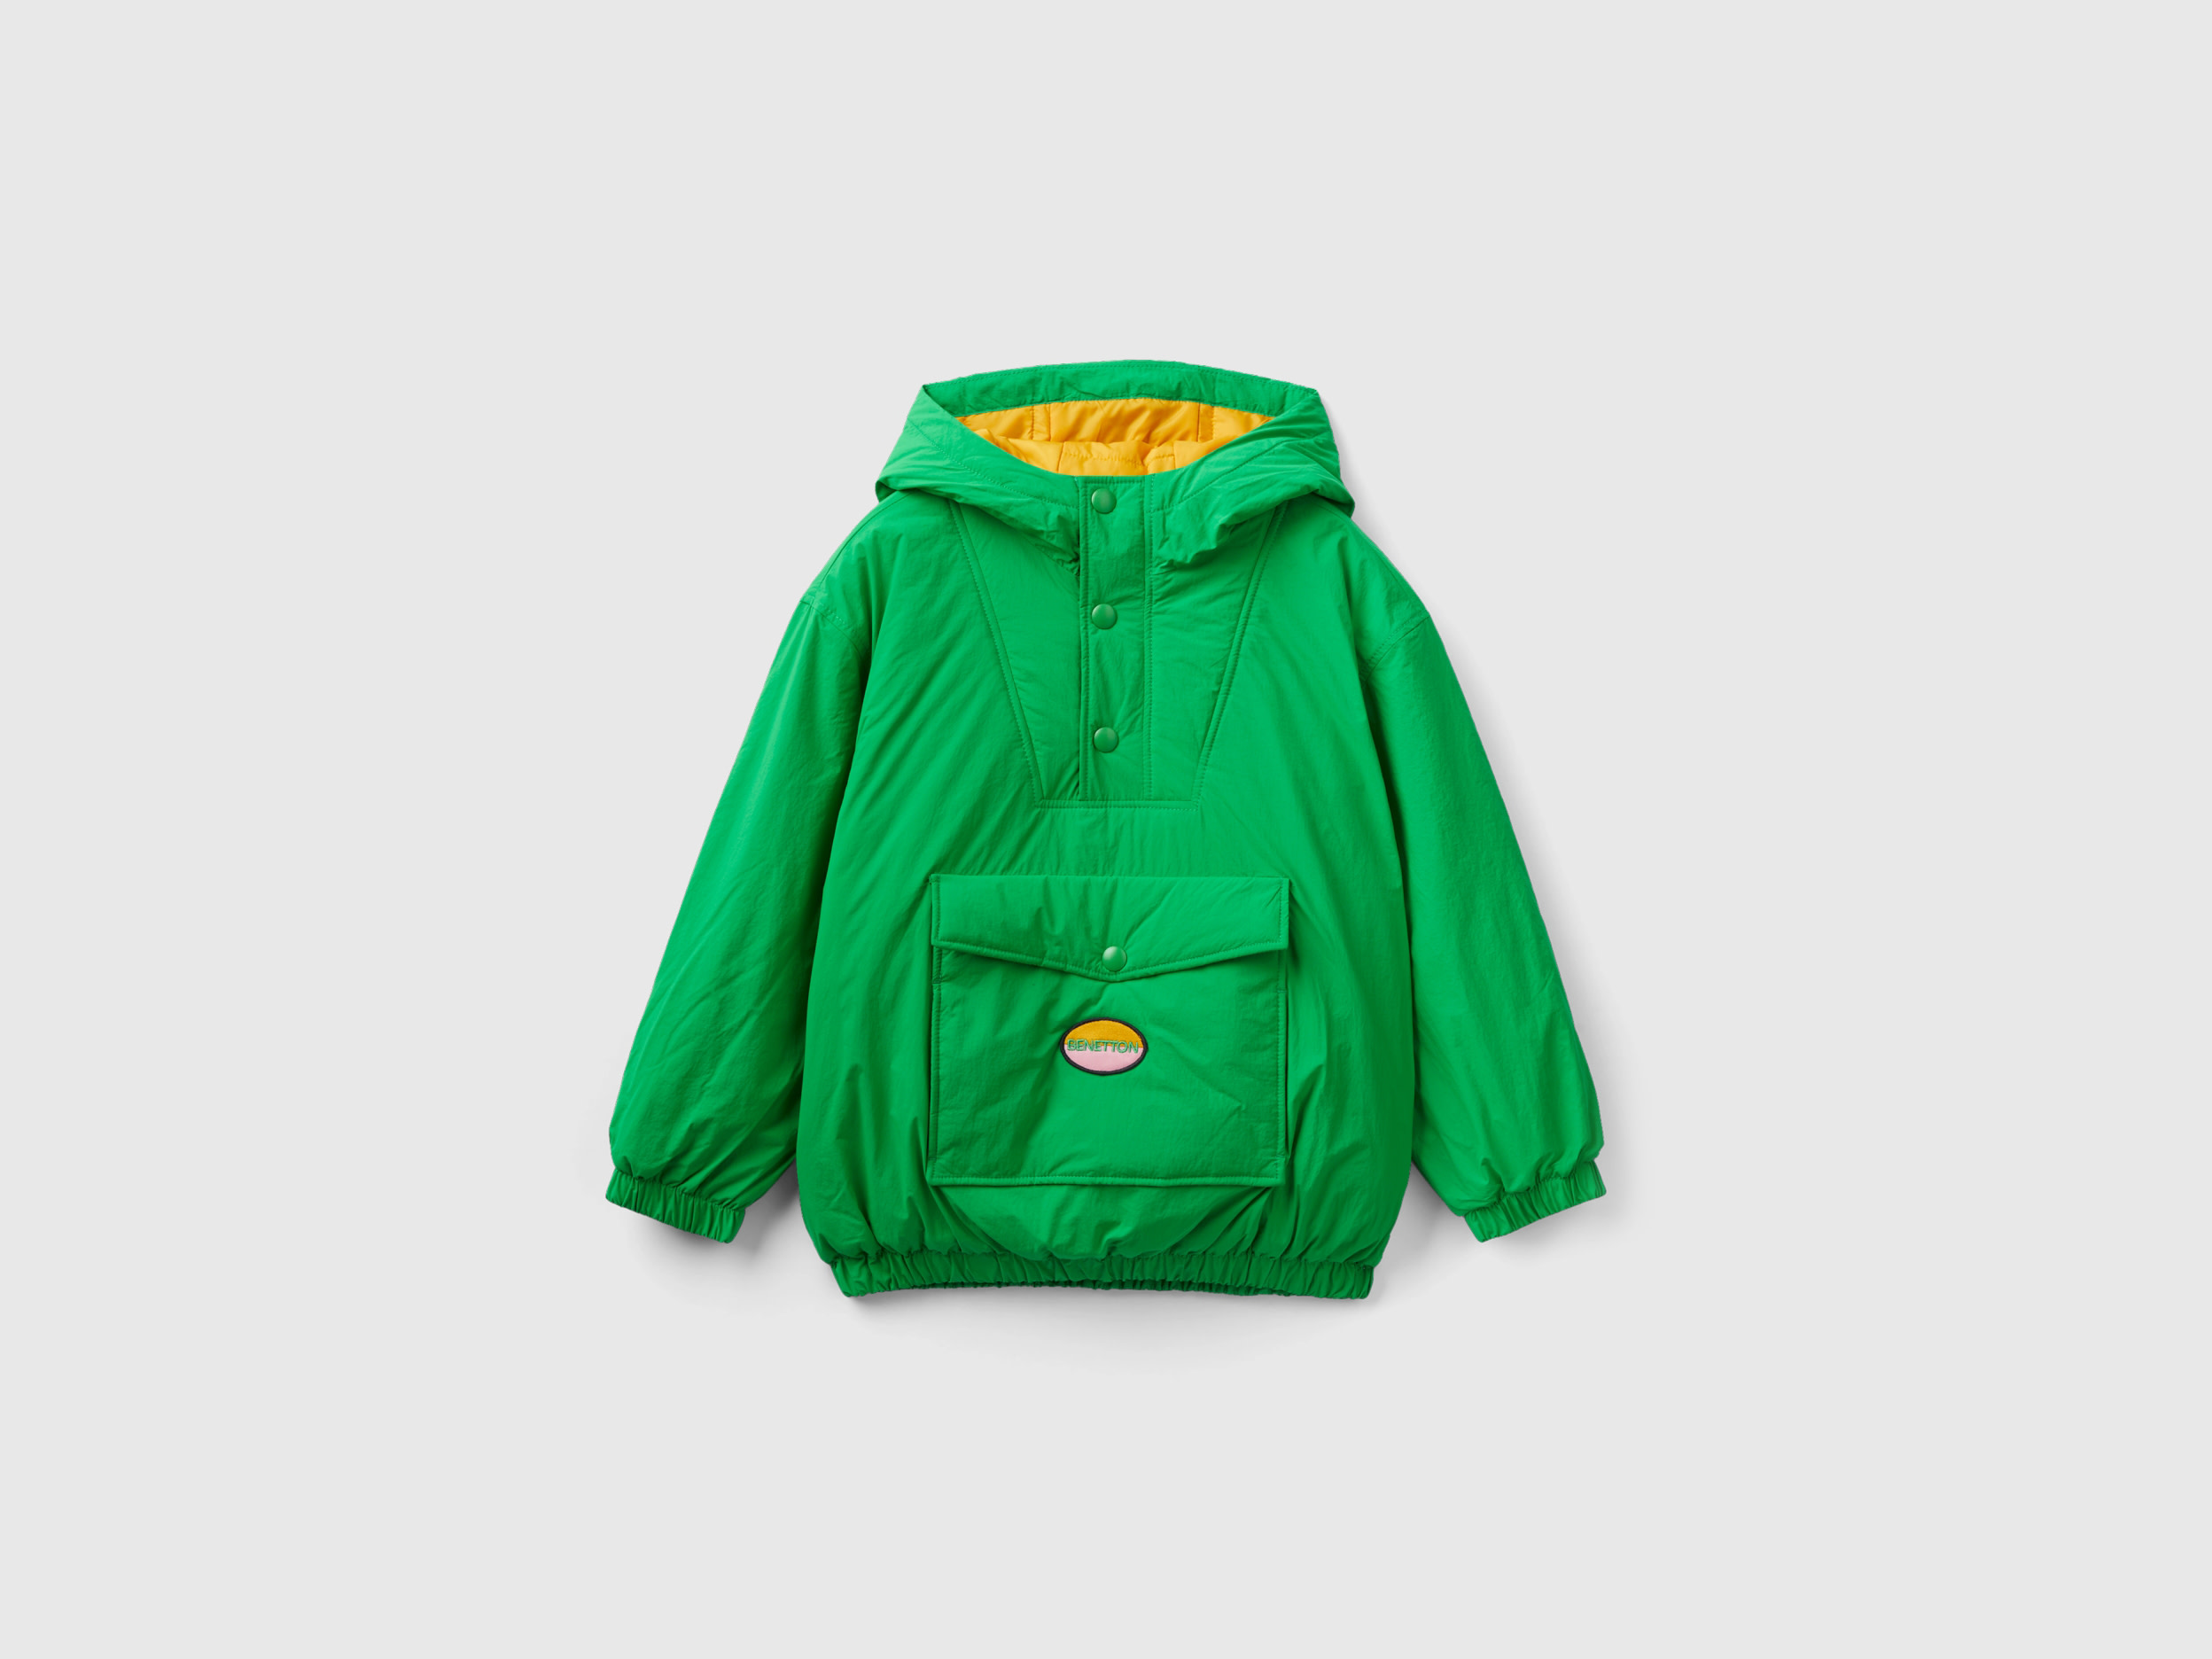 Benetton, Green Jacket With Pocket, size 2XL, Green, Kids